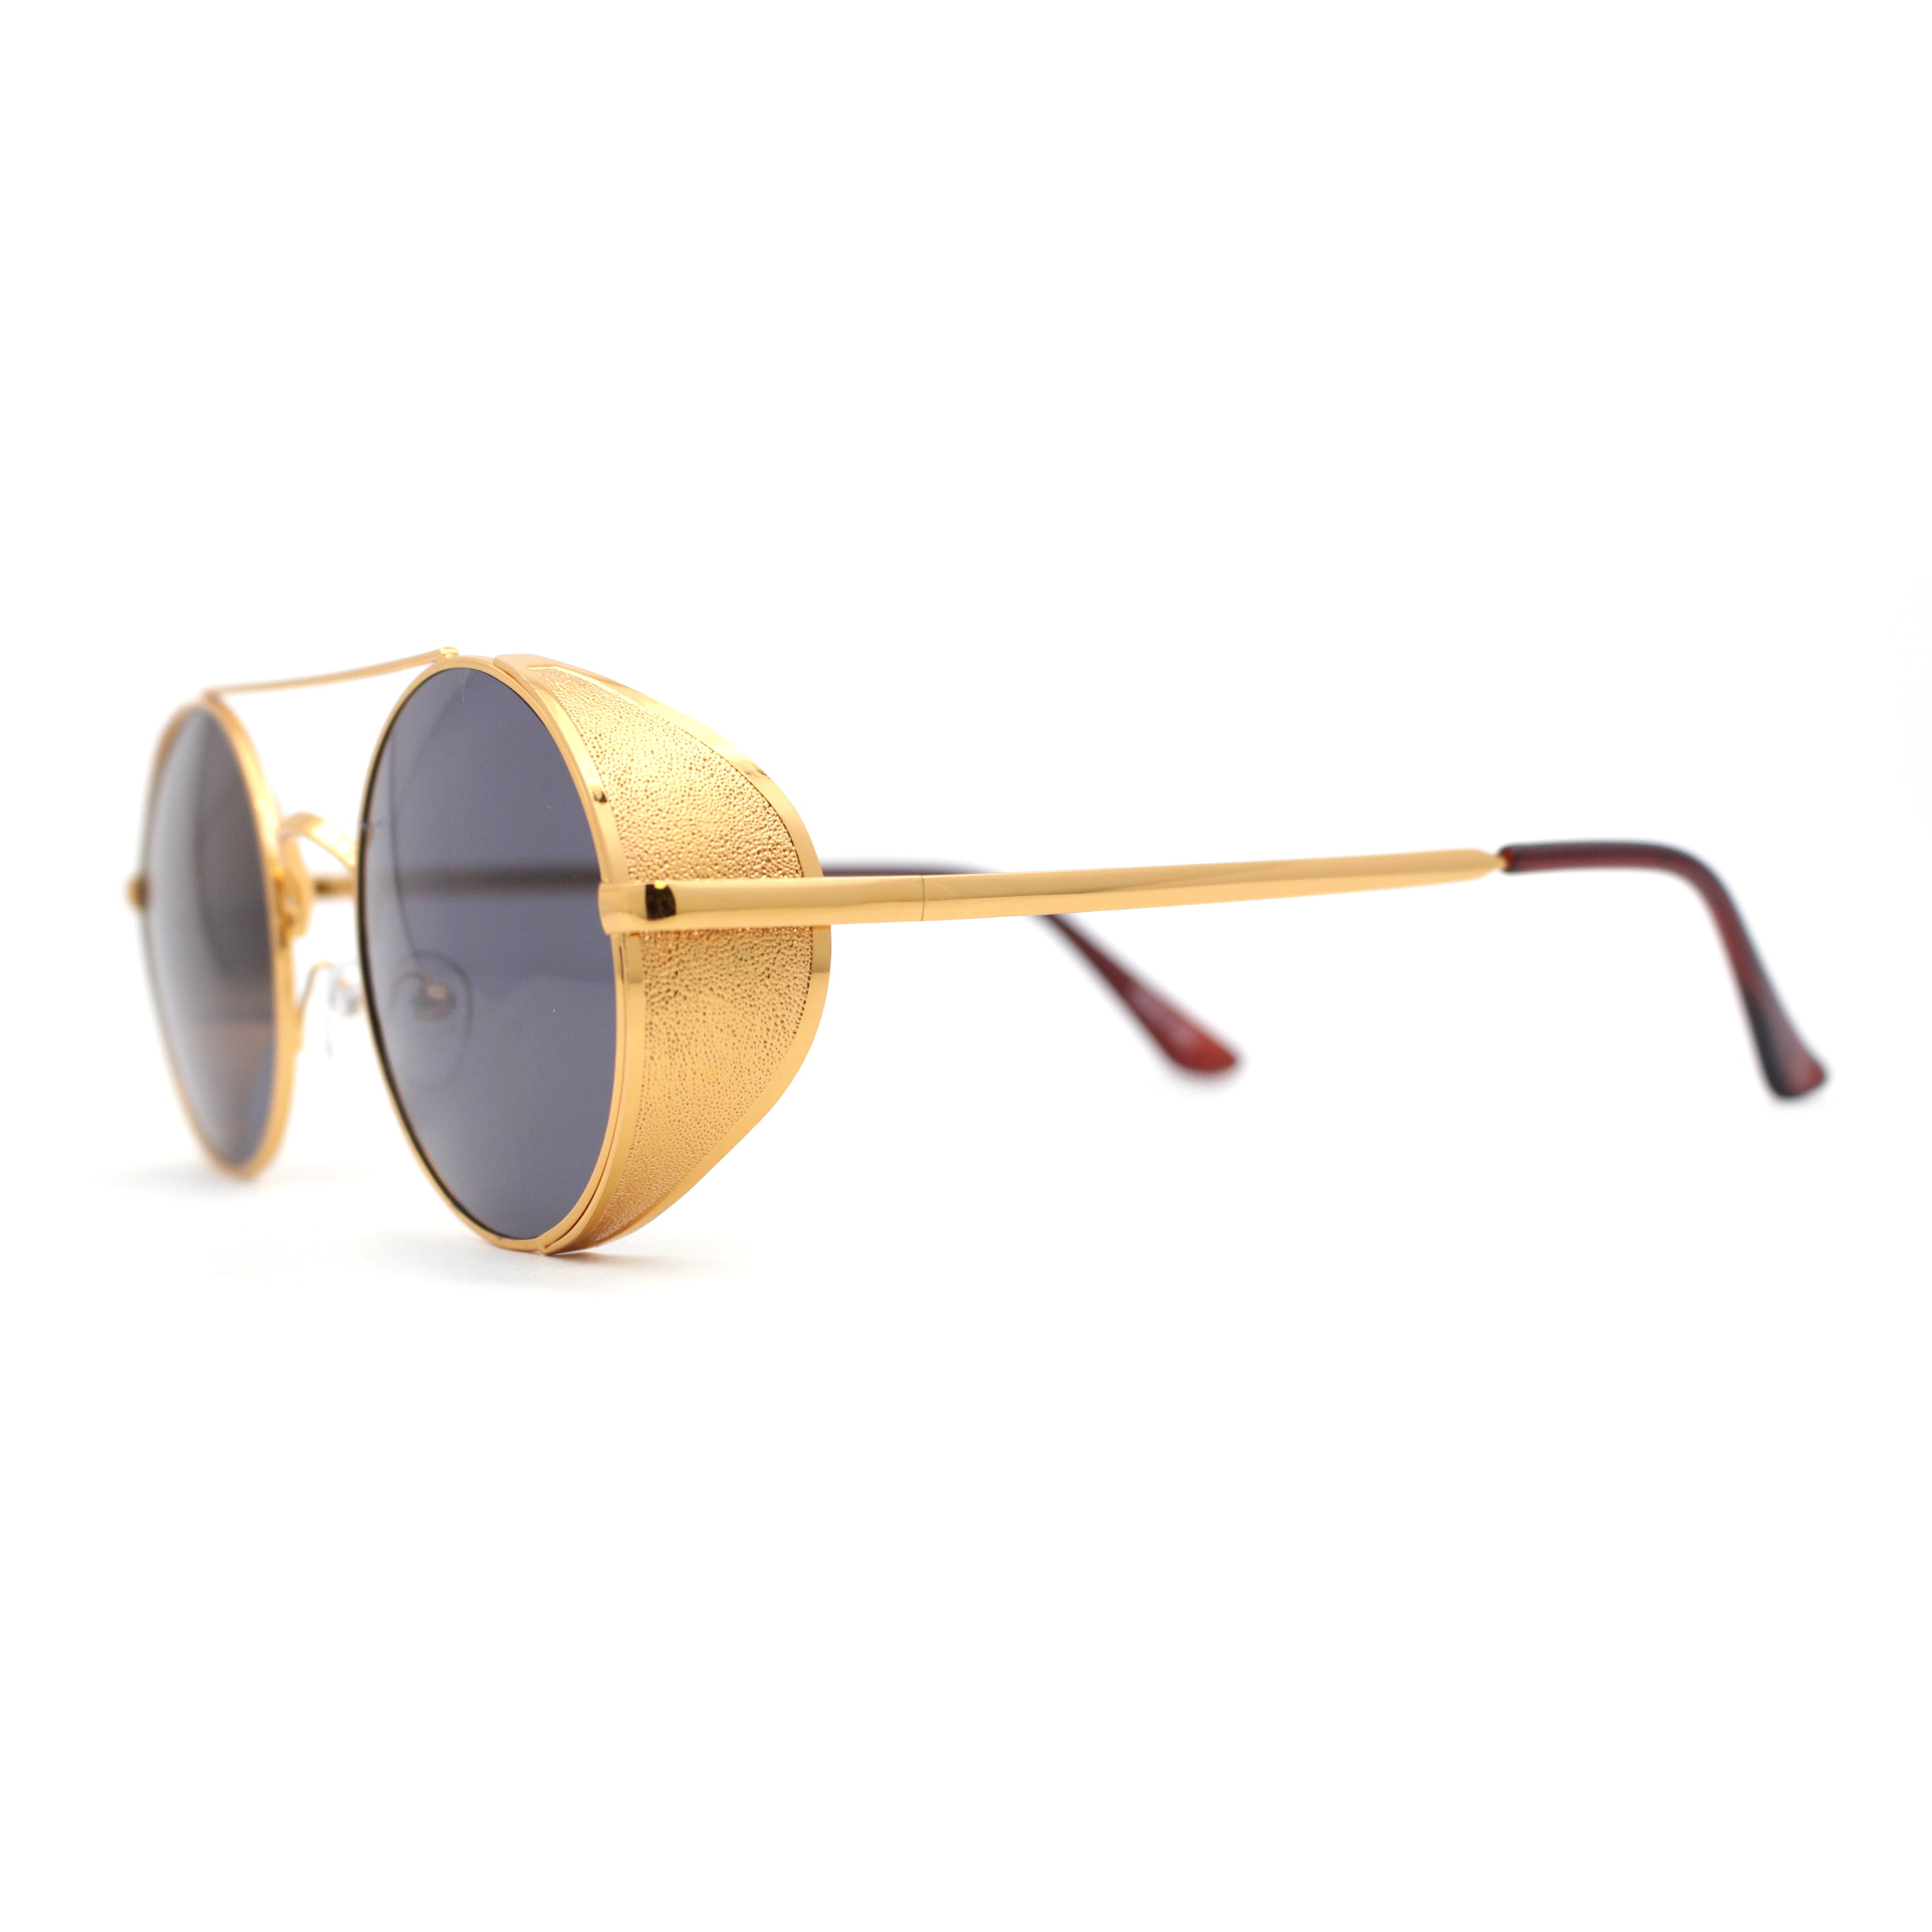 Round Circle Lens Side Windbreaker Retro Double Bridge Cafe Racer  Sunglasses Yellow Gold - Black